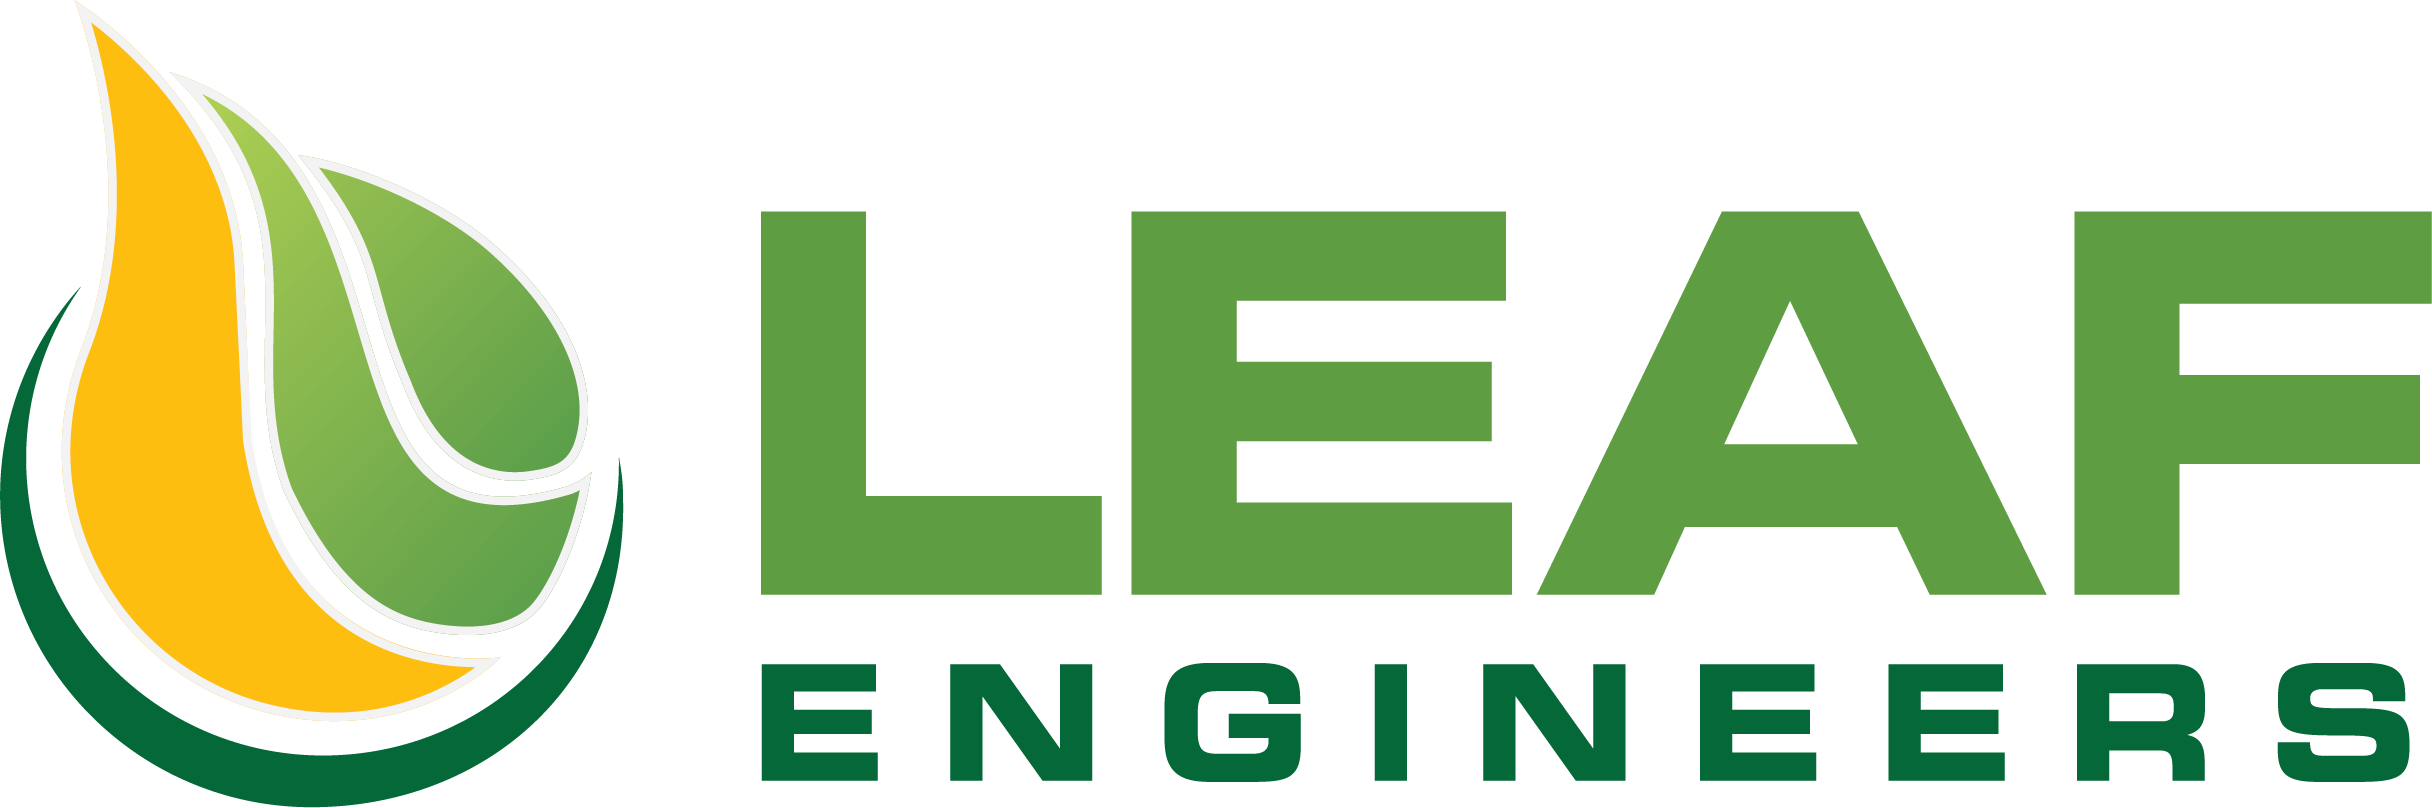 LEAF-Engineers_logo_NEW_2020